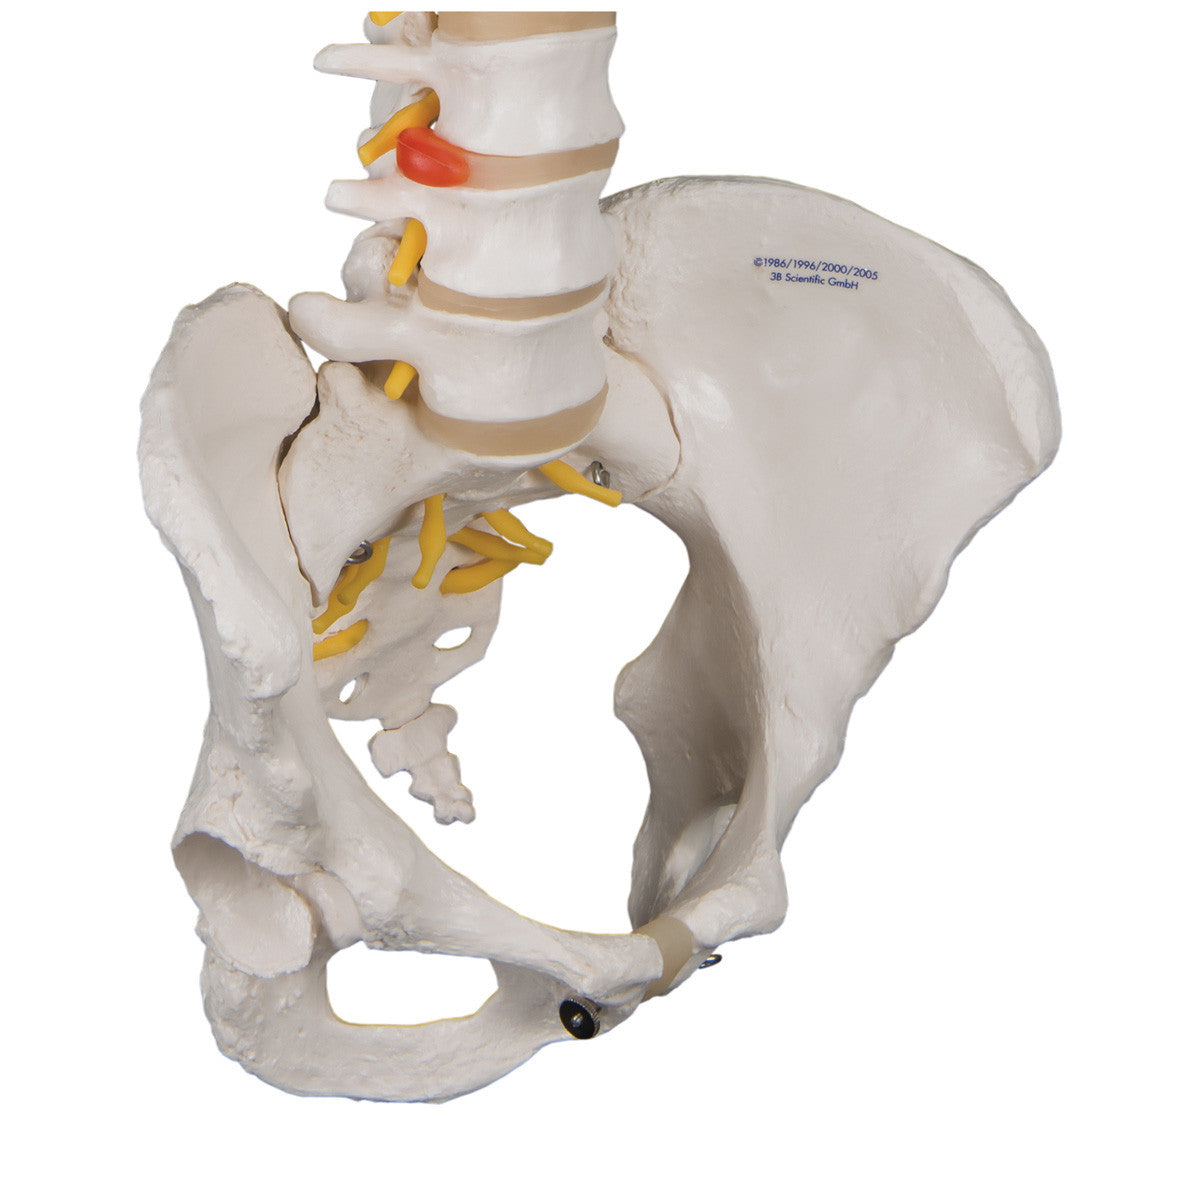 a58-4_05_1200_1200_classic-flexible-human-spine-model-with-female-pelvis-3b-smart-anatomy__72806.1589753025.1280.1280.jpg